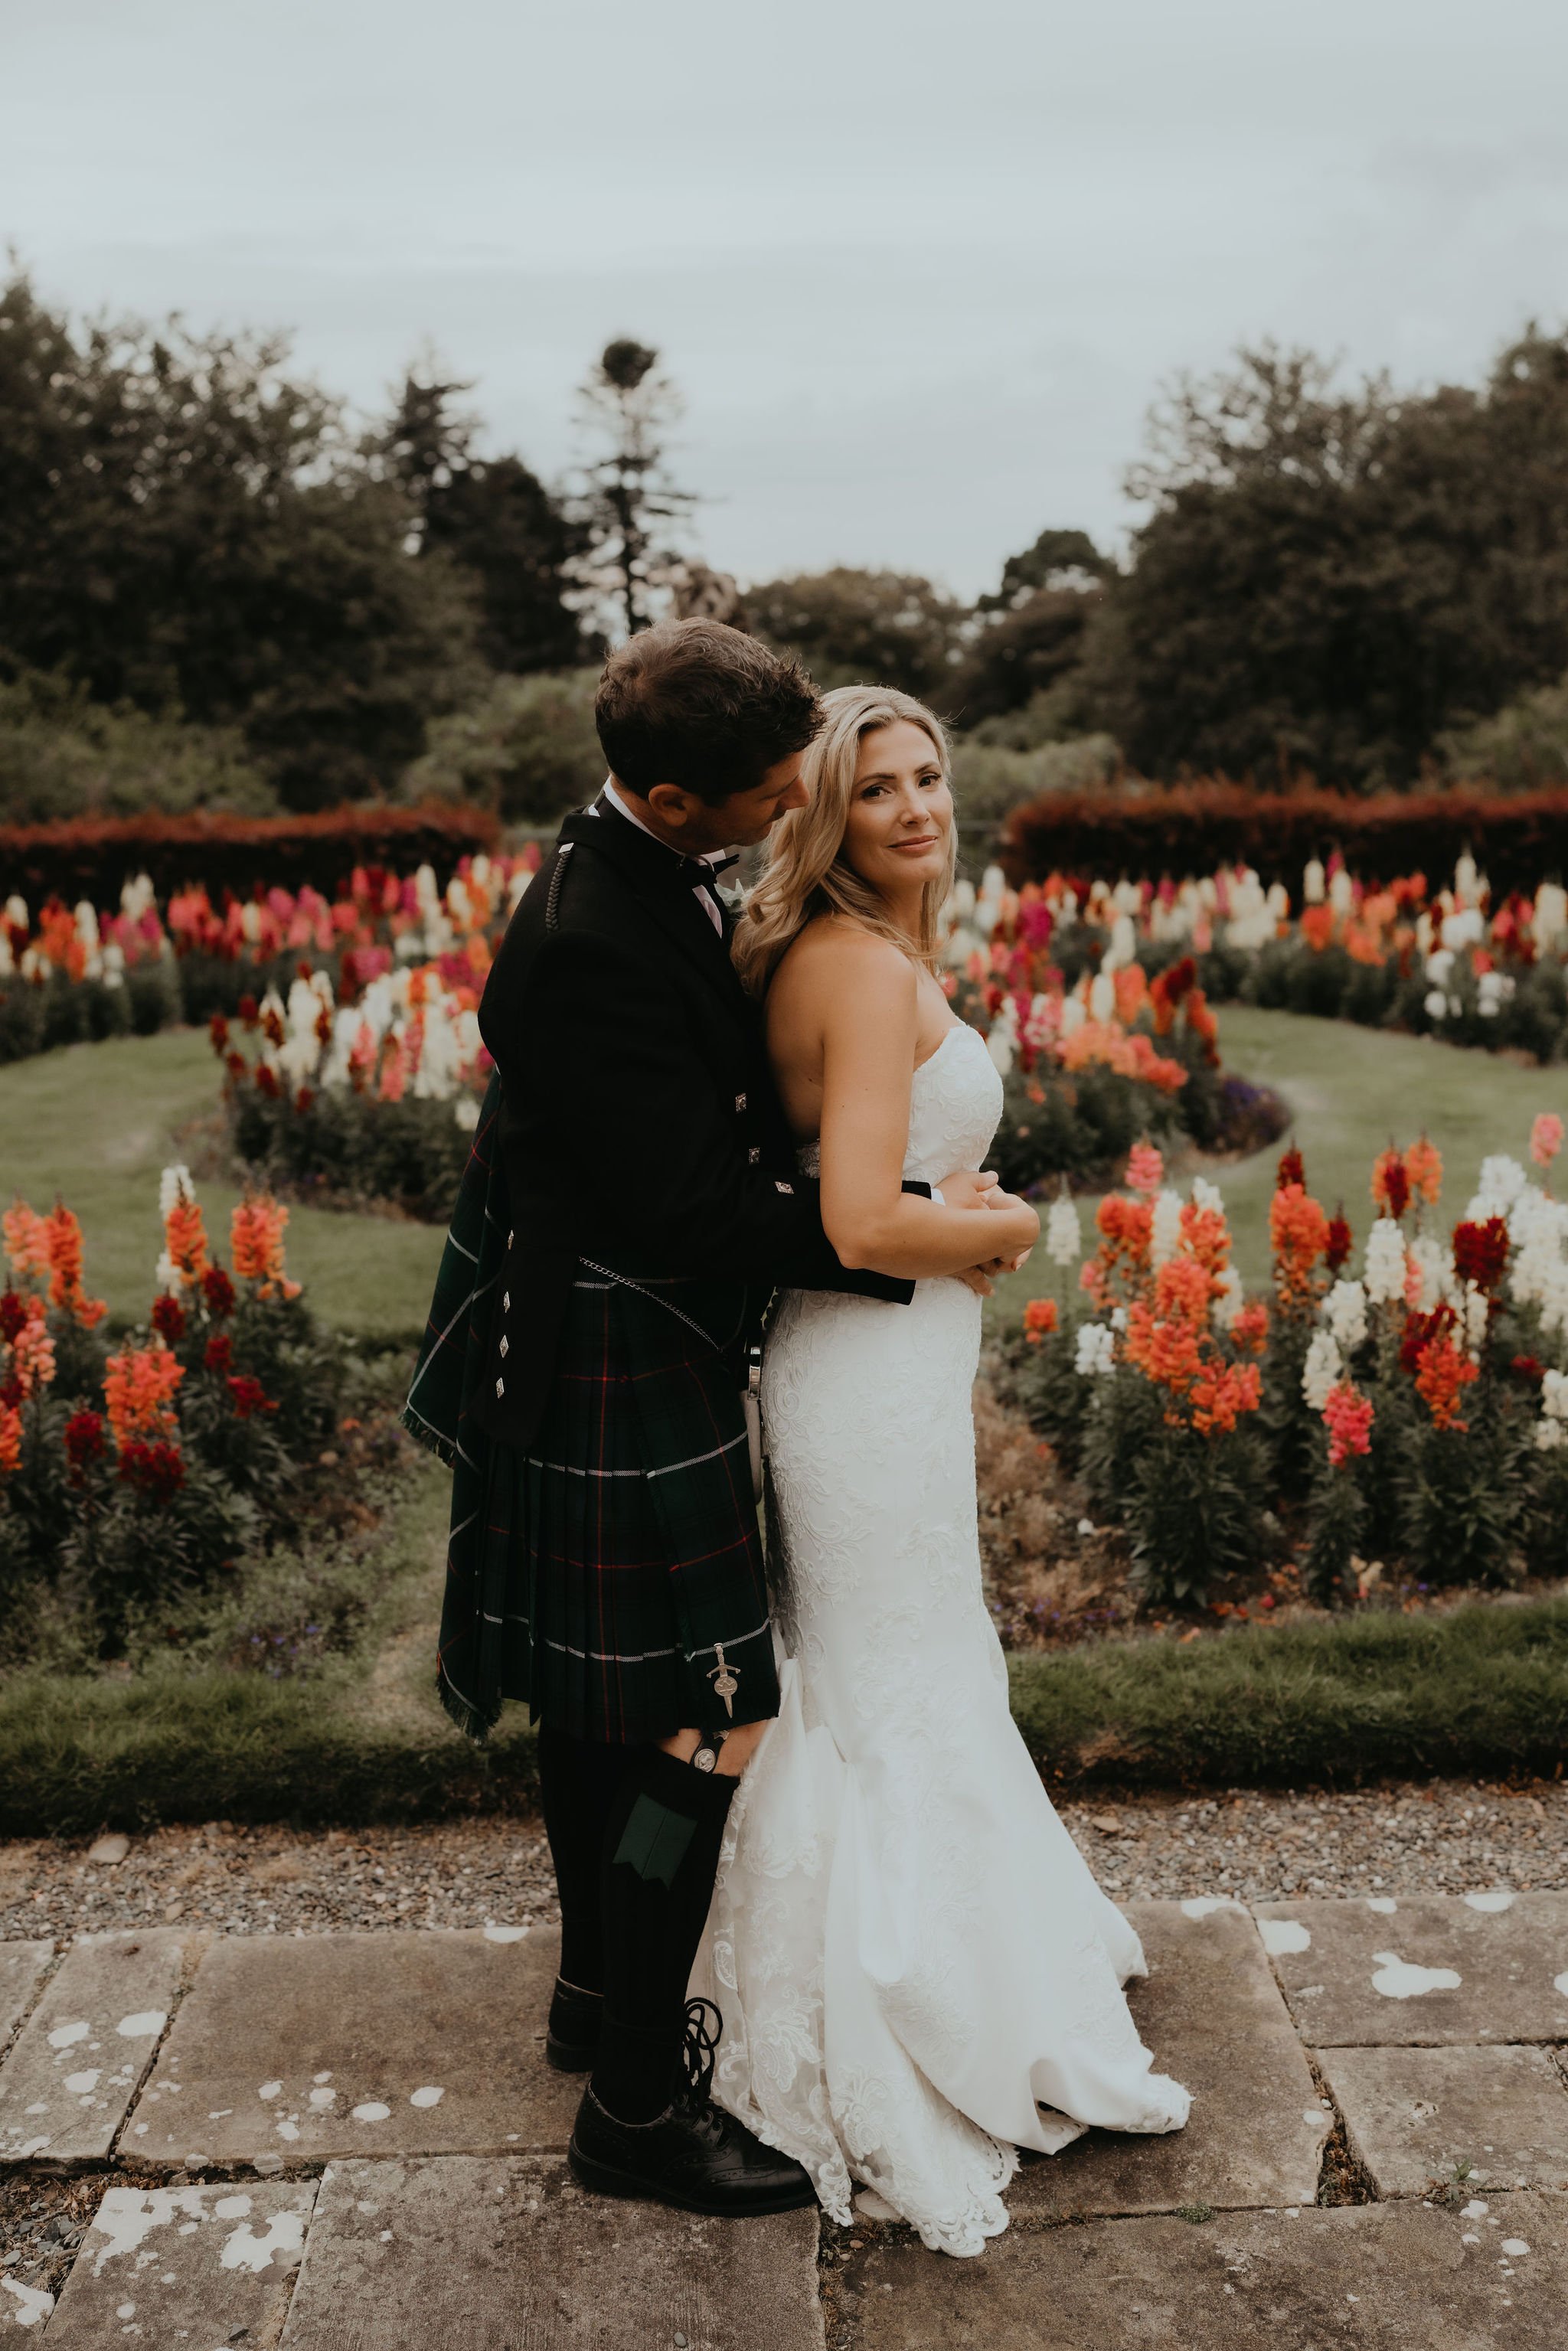  Glenapp Castle wedding photographer 